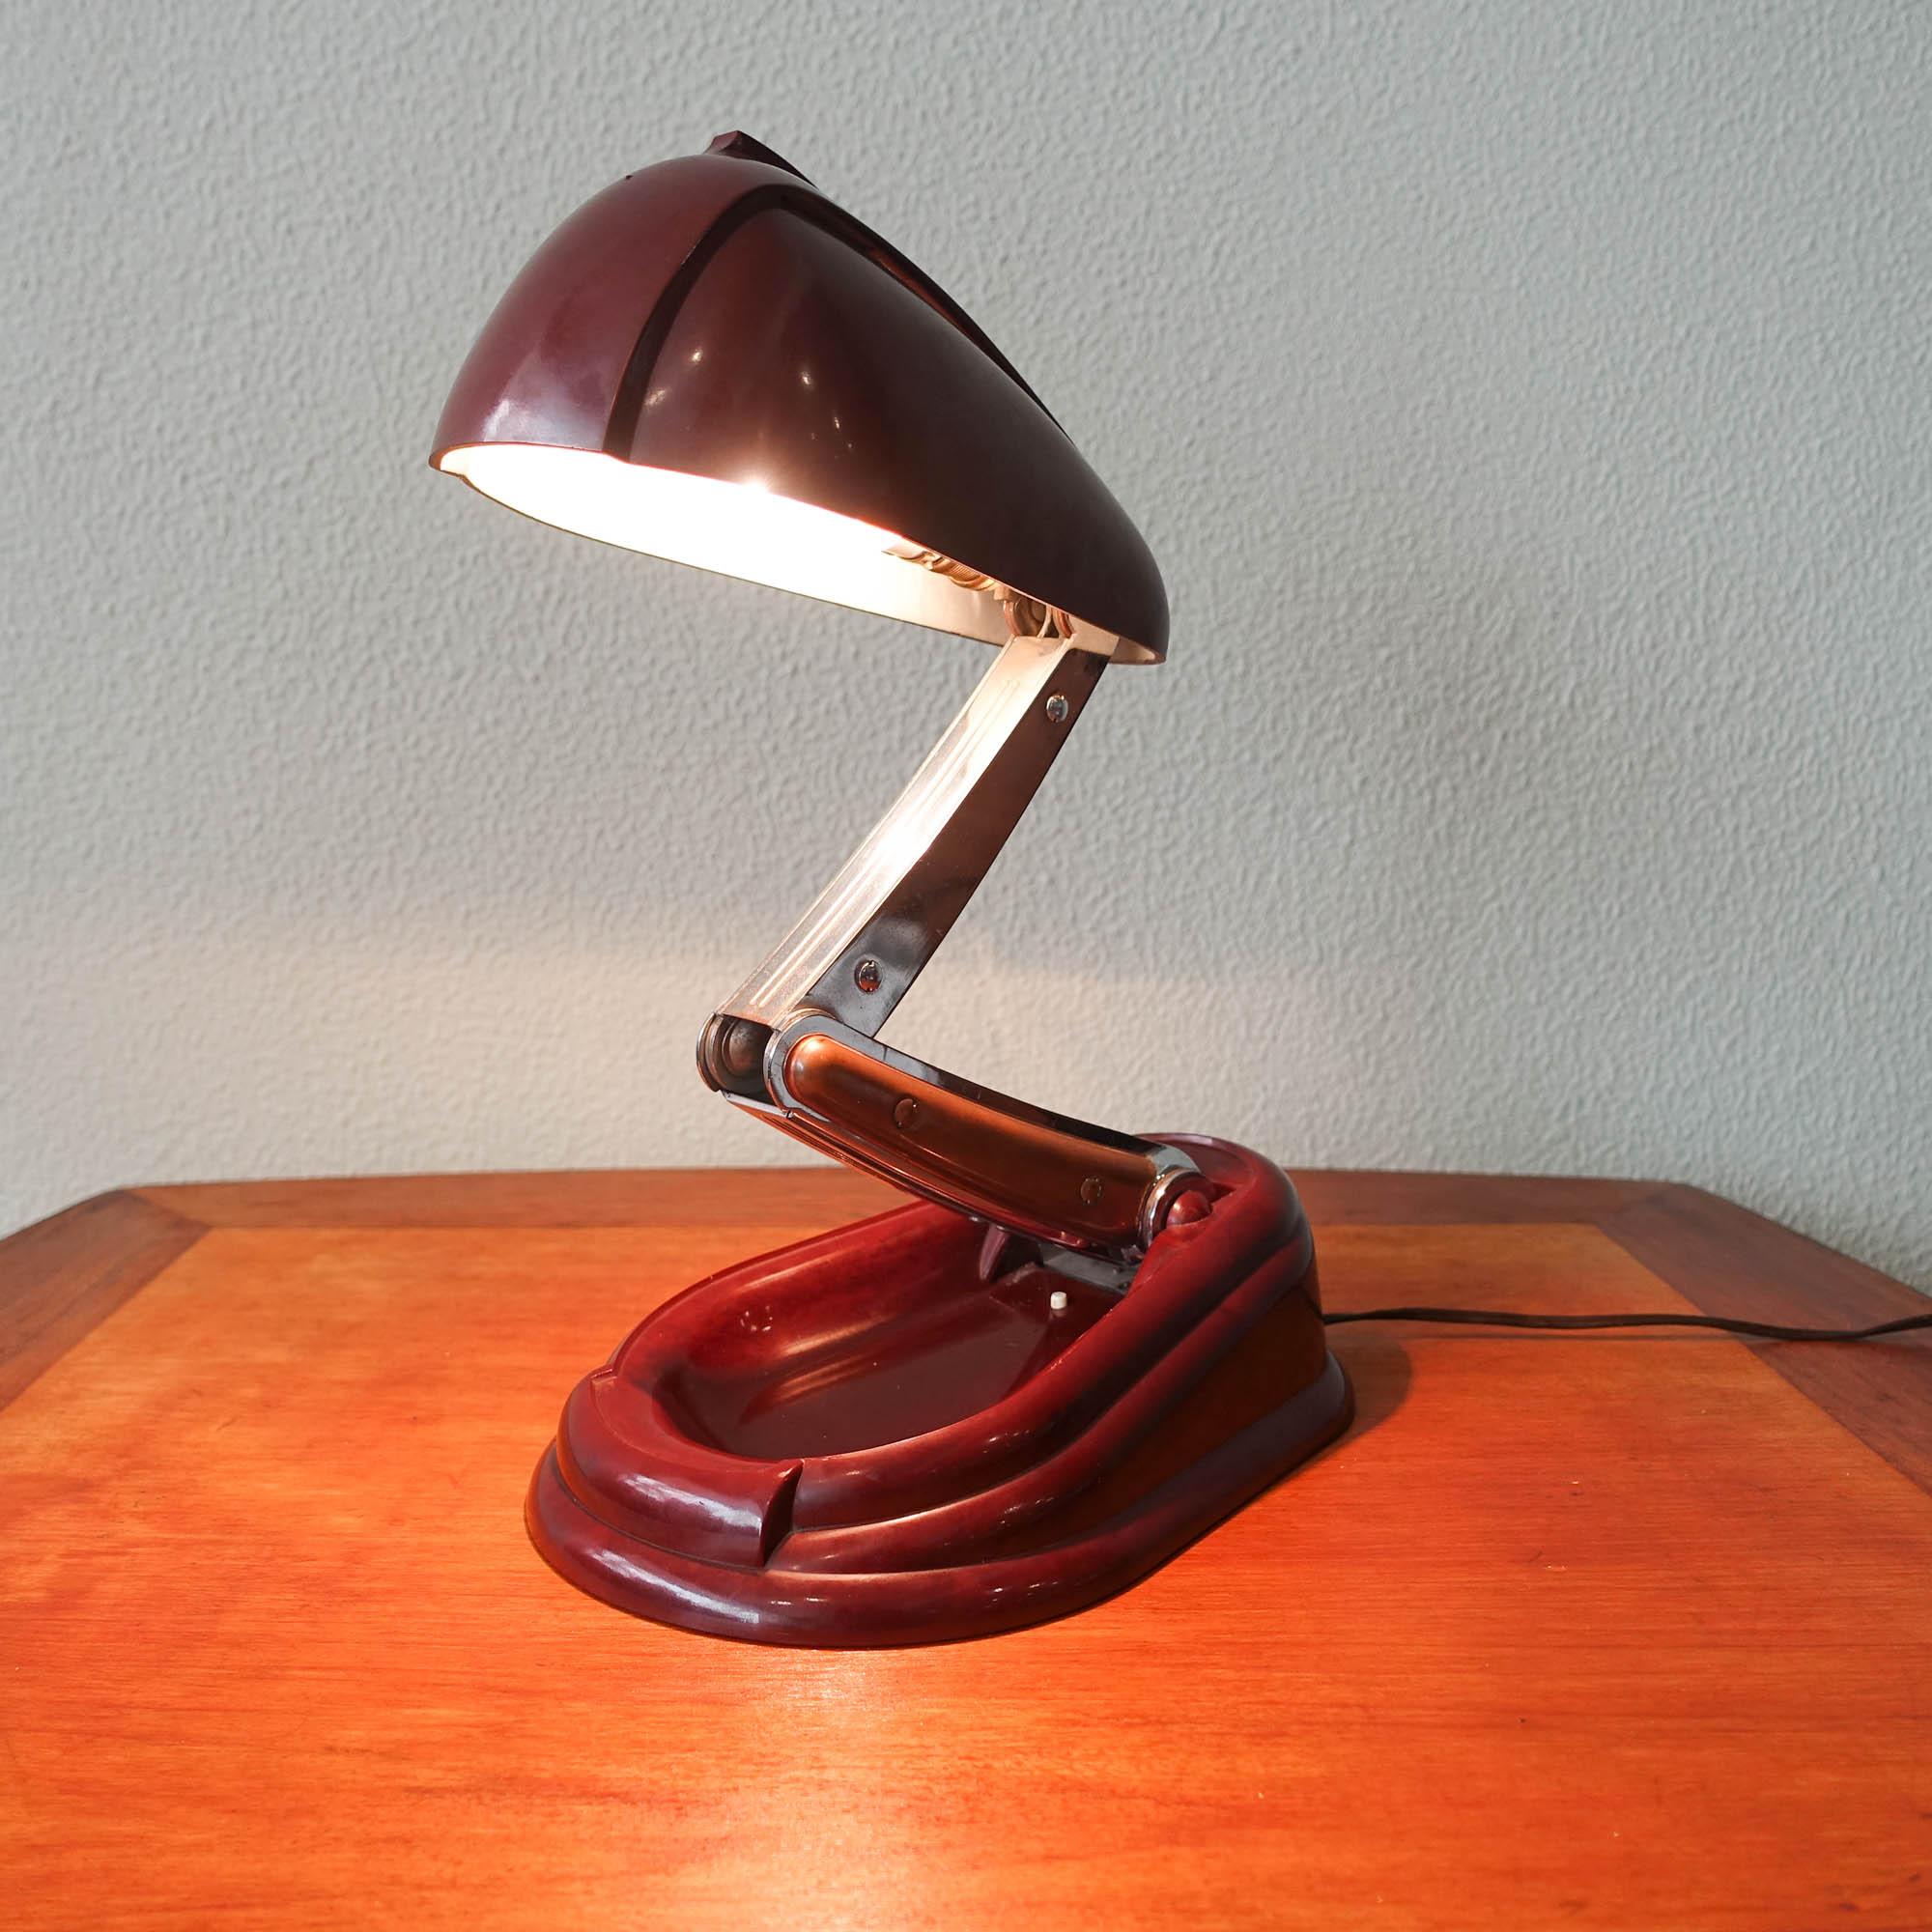 Art Deco Model Bolide Table Lamp by Jumo Brevete for Jumo, 1940s For Sale